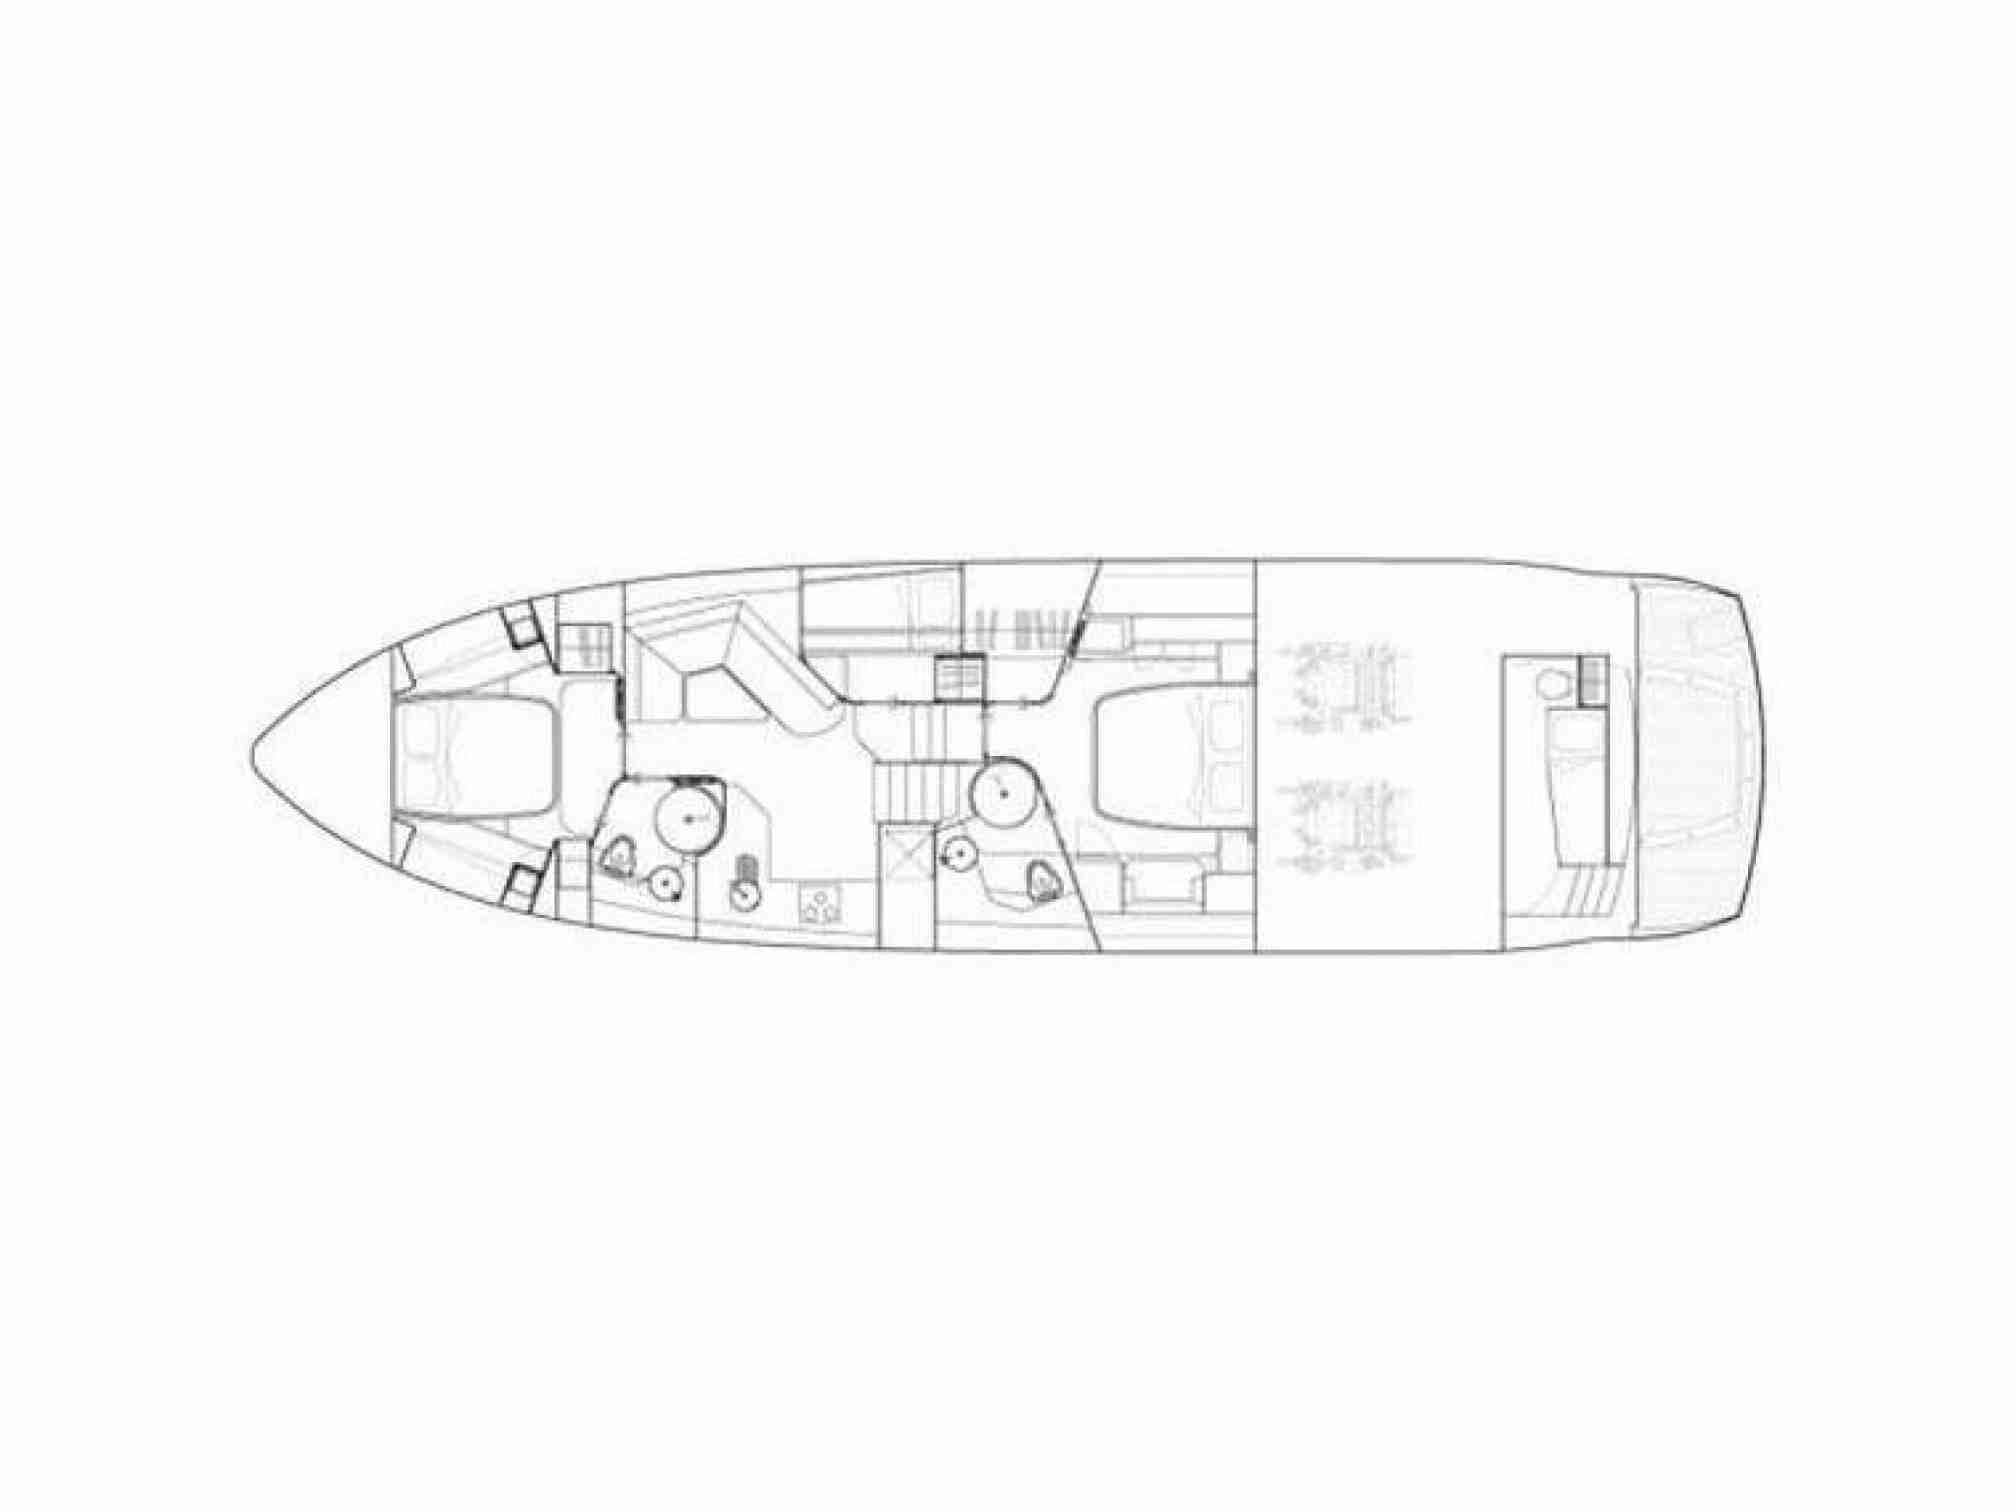  Sunseeker Predator 62 charter yacht layout